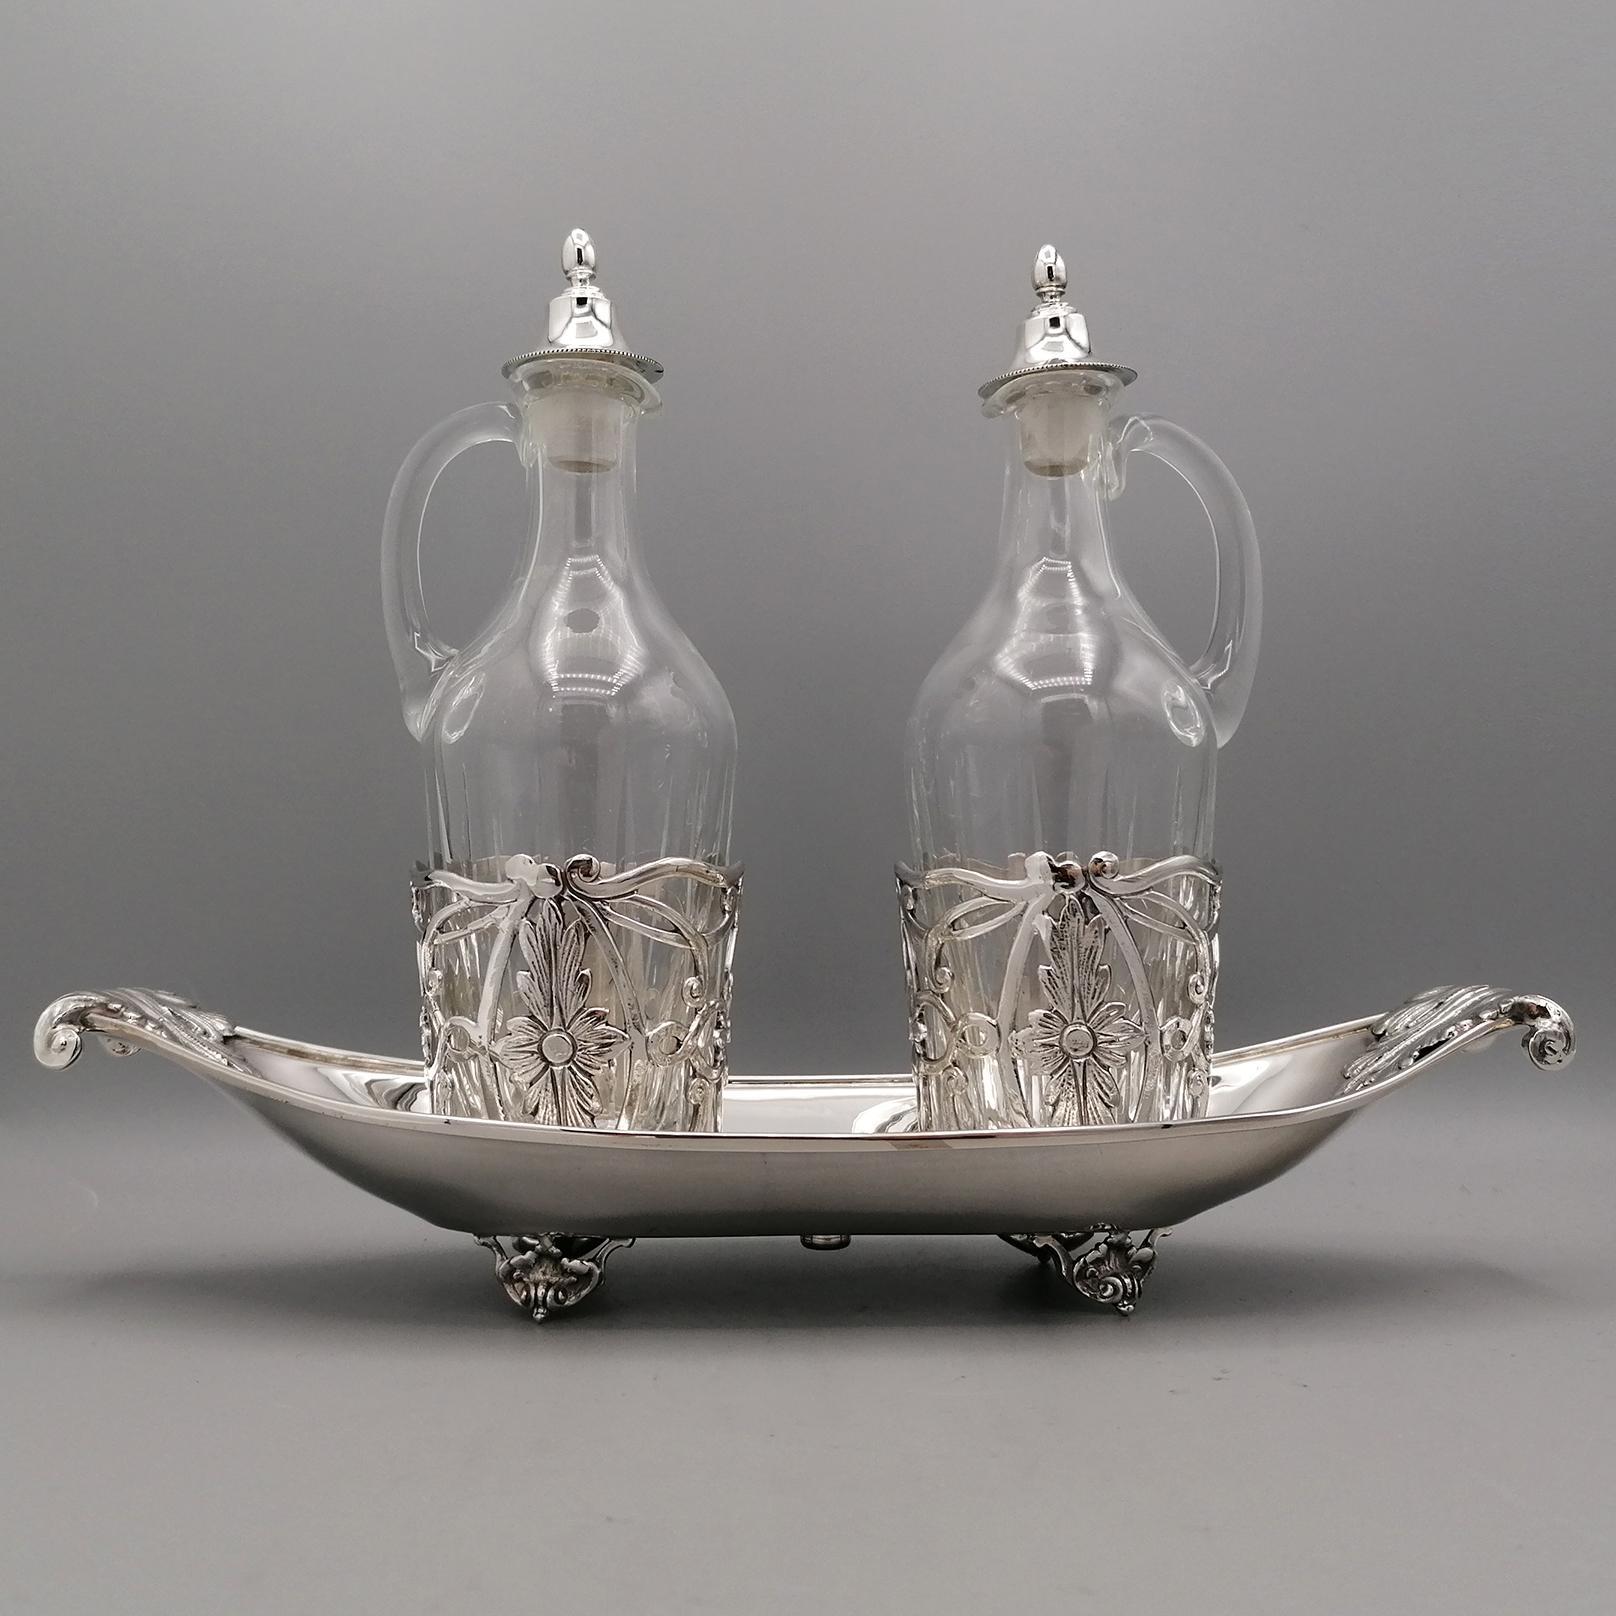 20th Century Italian Art Nouveau - Liberty replica Sterling Silver - Cruet Set  For Sale 2